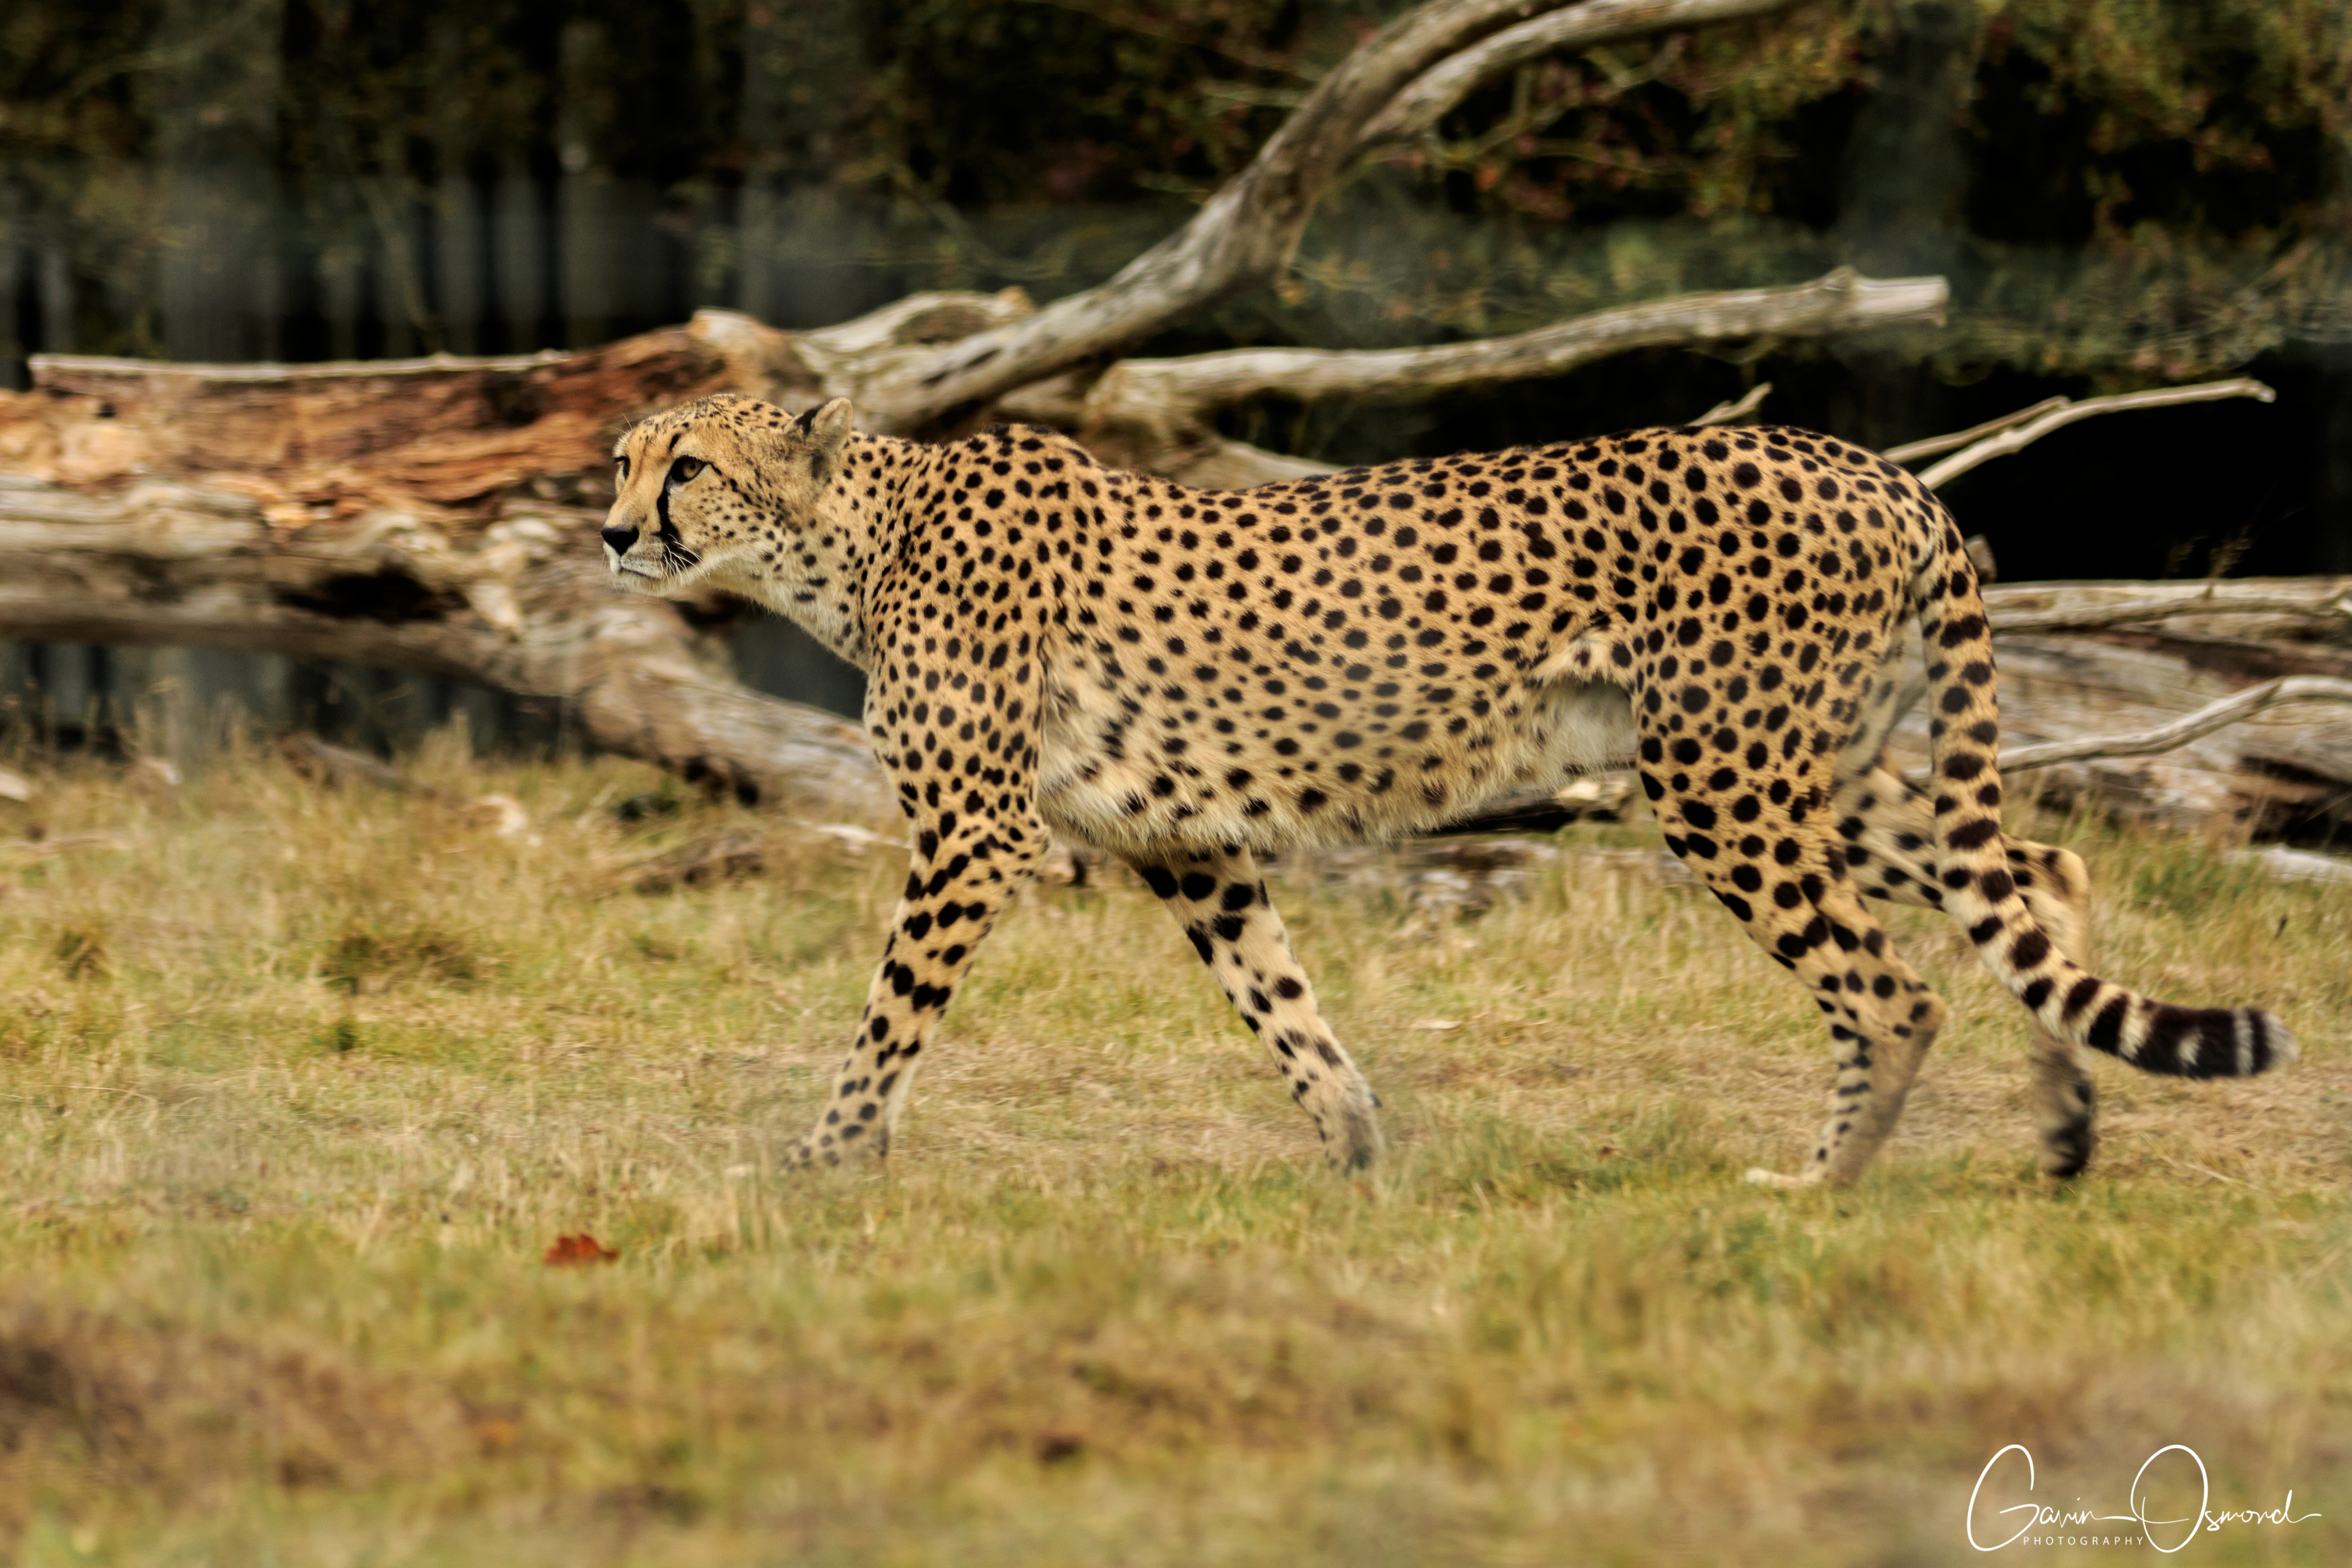 West Midlands Safari Park Cheetah